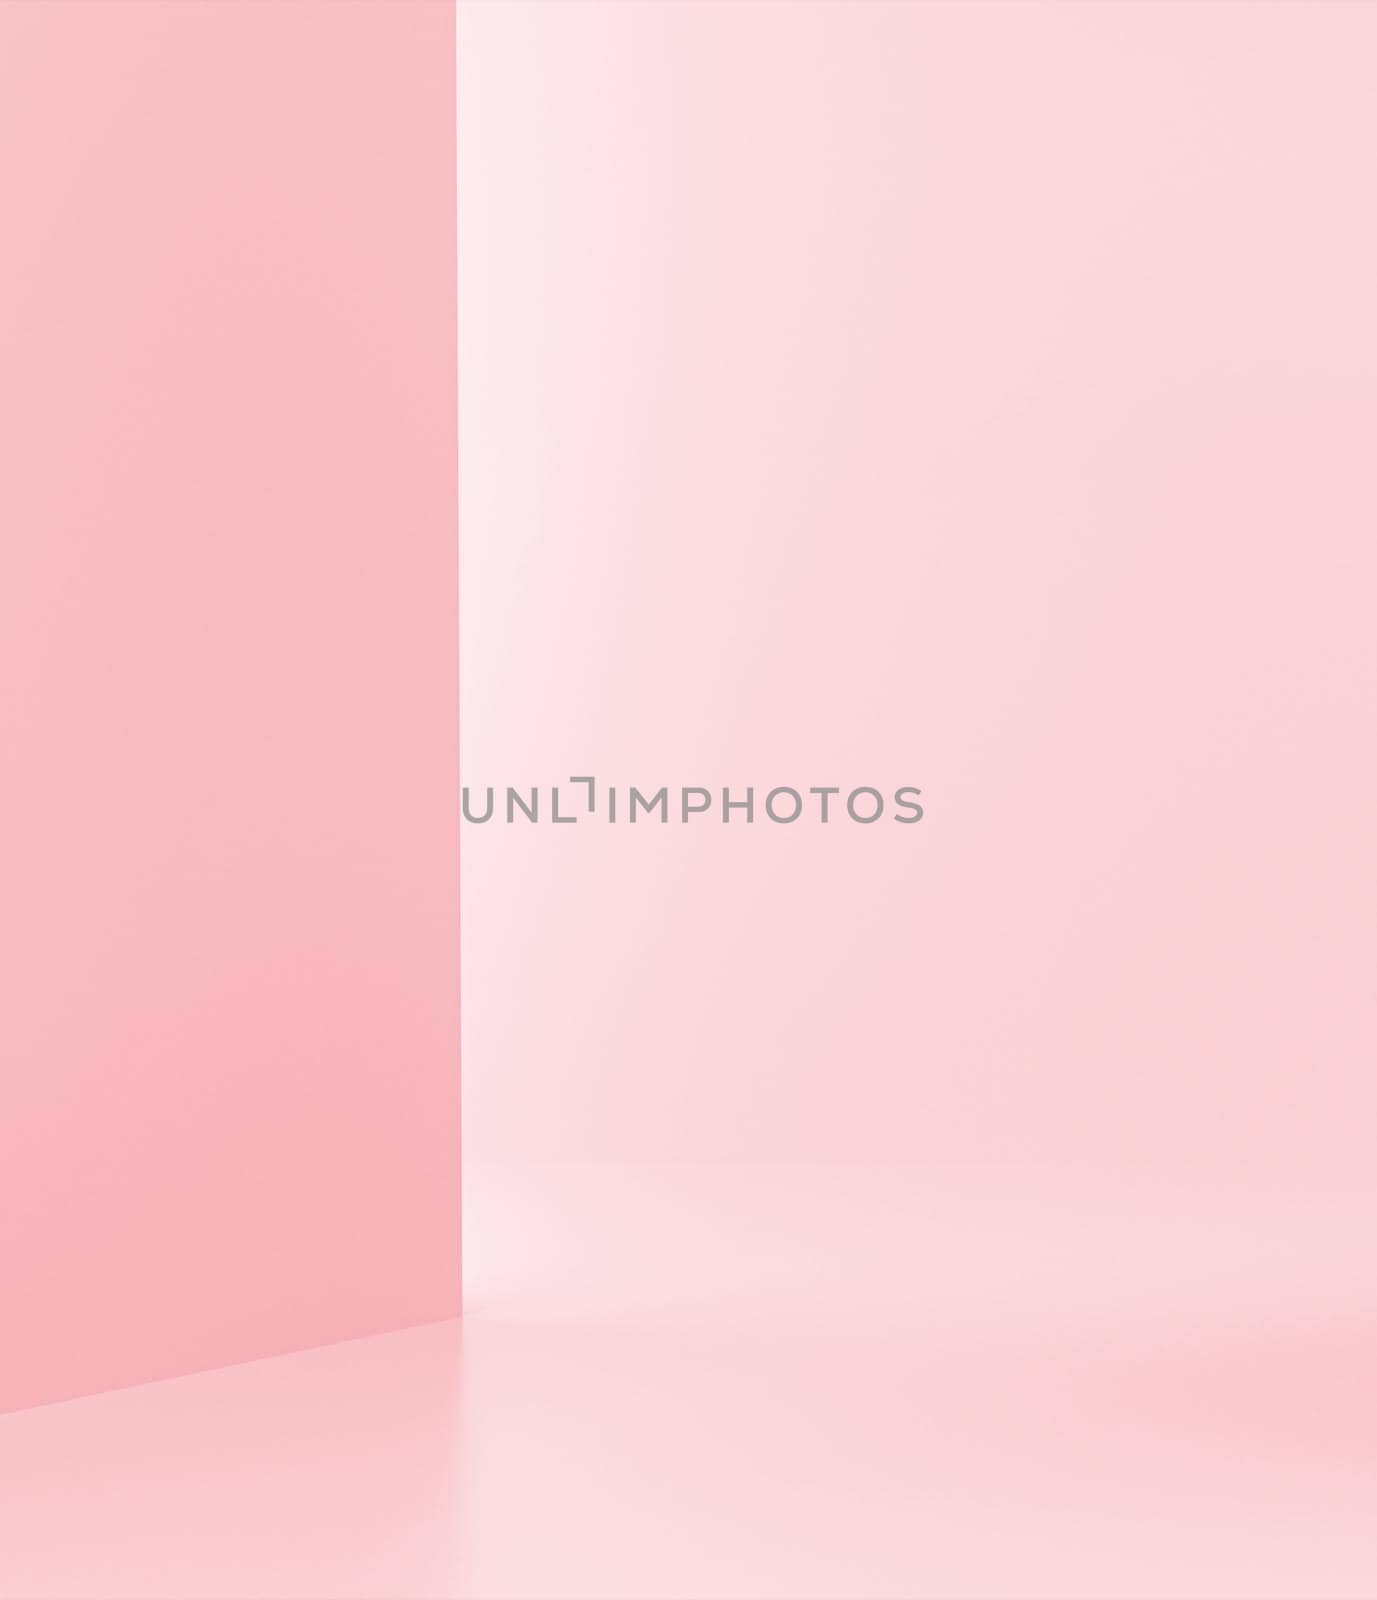 Minimal studio light for product presentation on pink background. by ImagesRouges